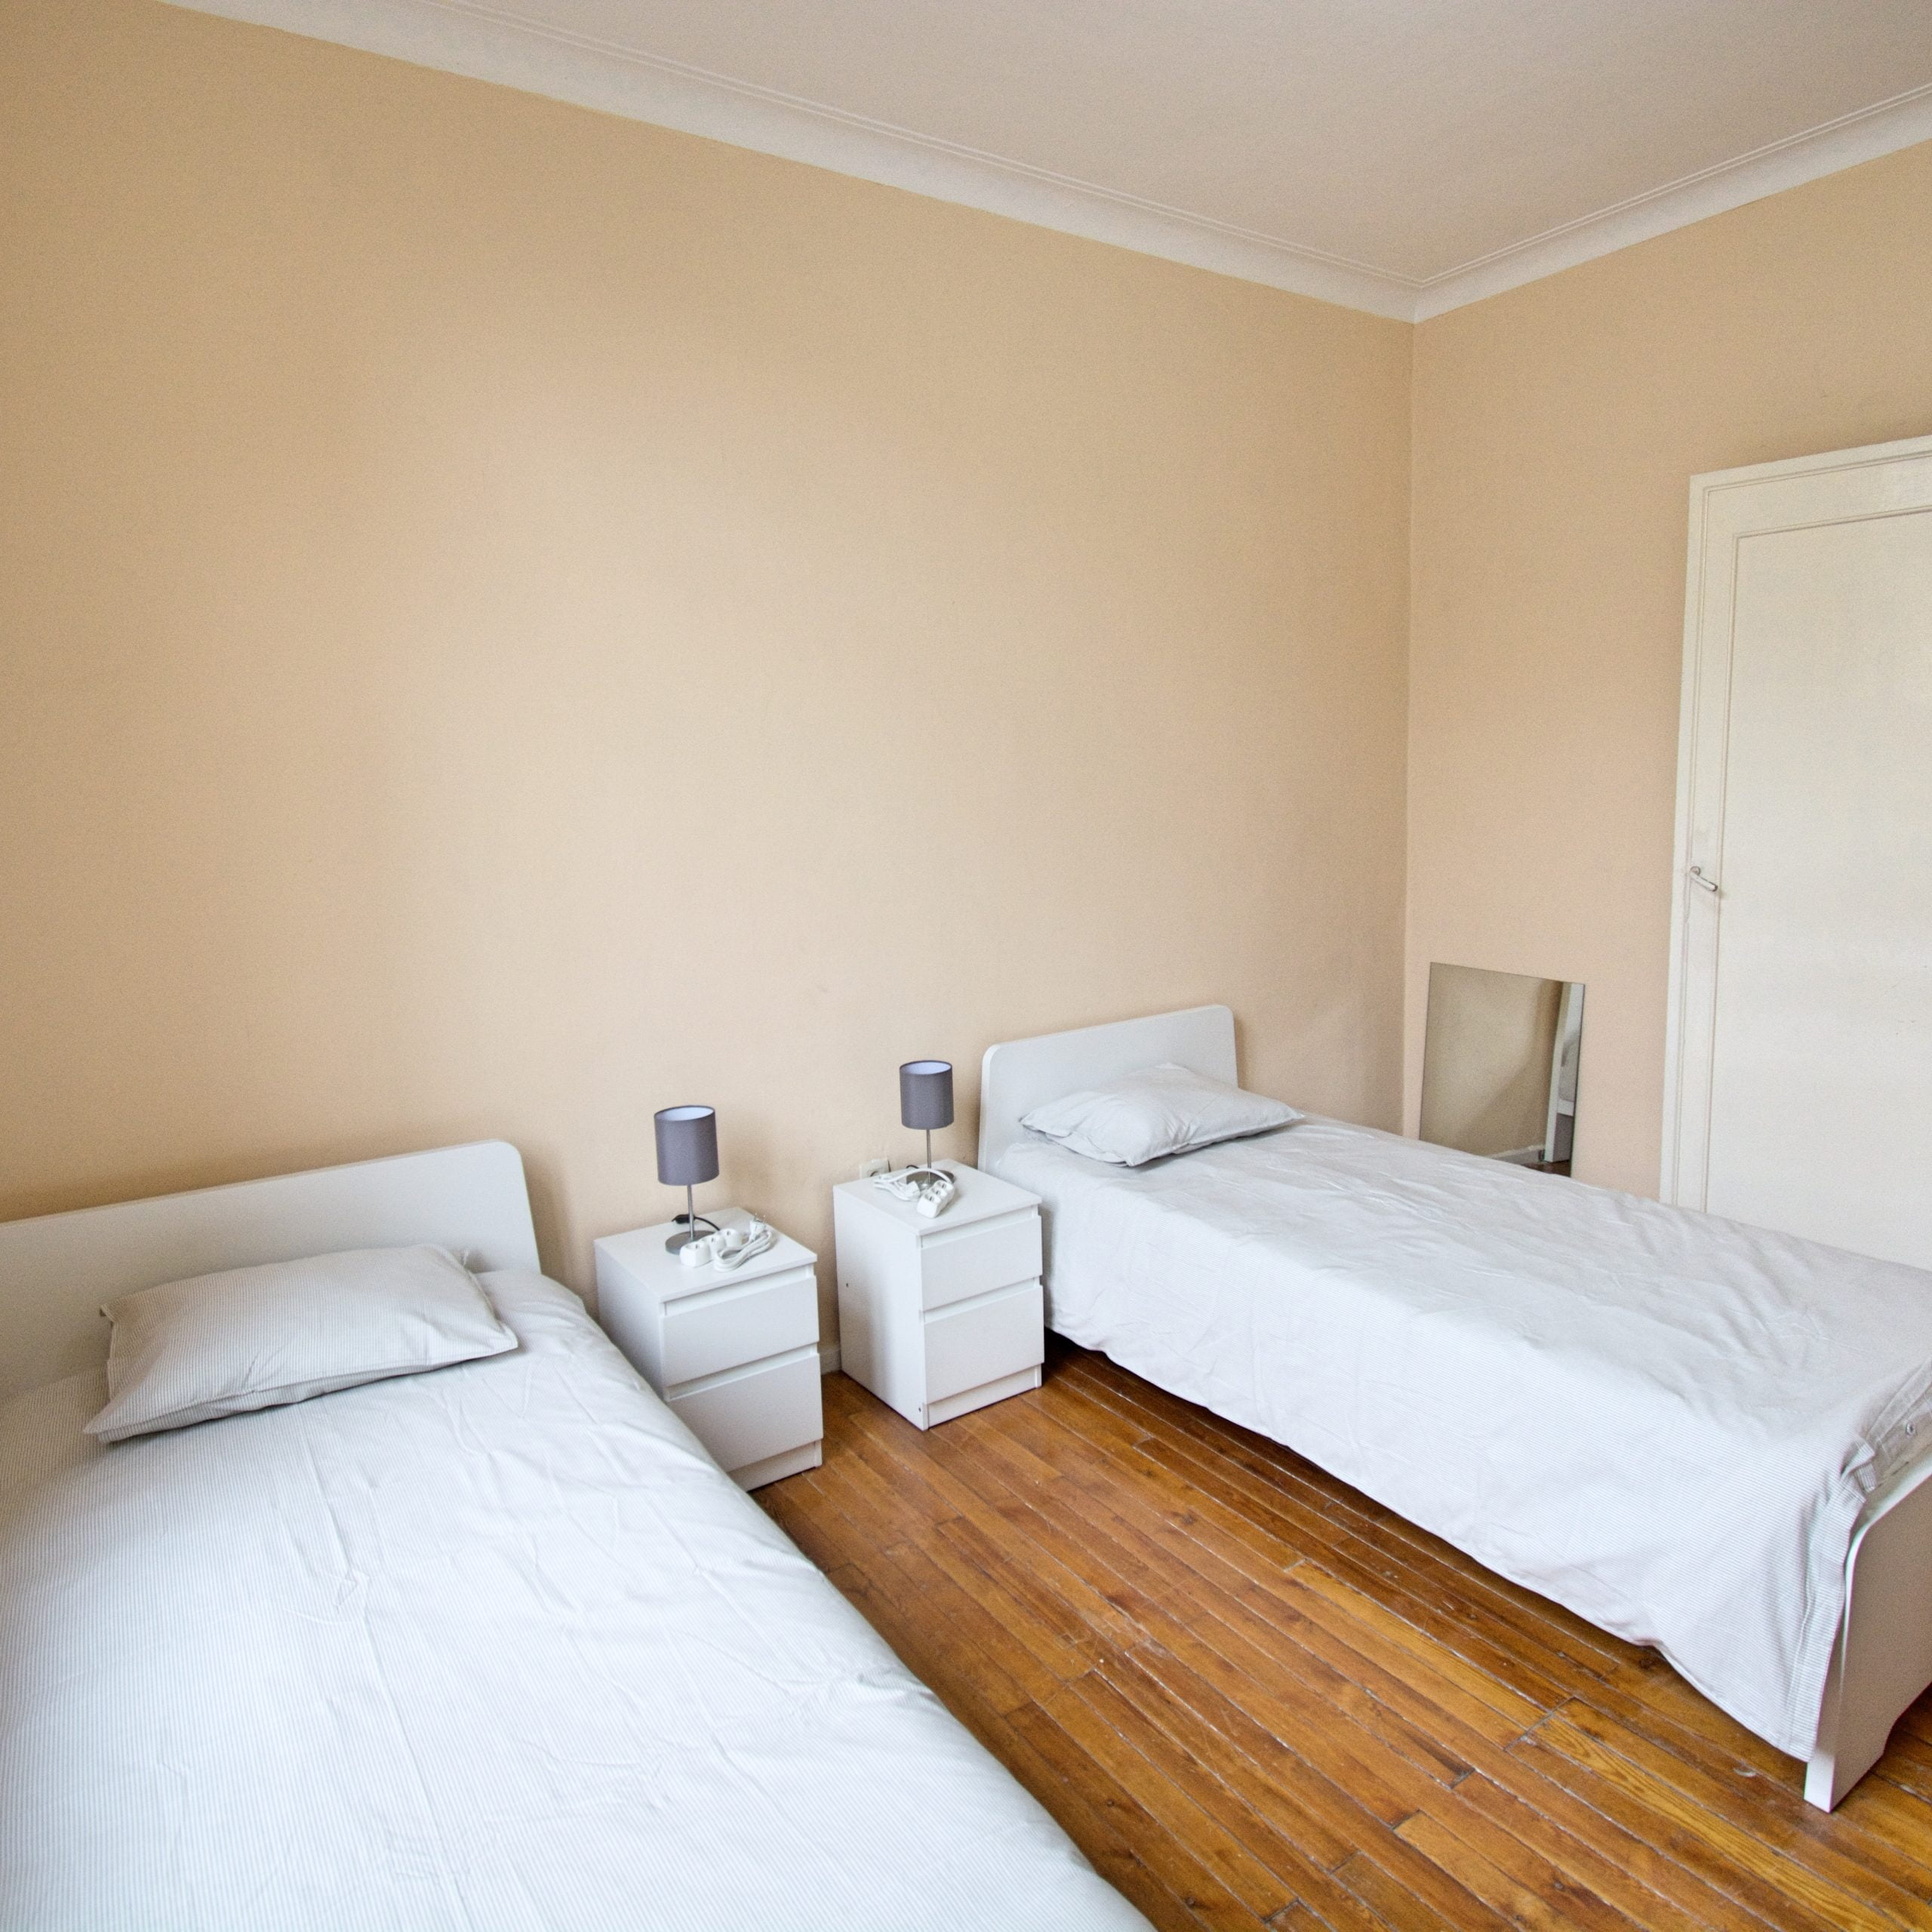 Rental apartment for workers in Antwerp